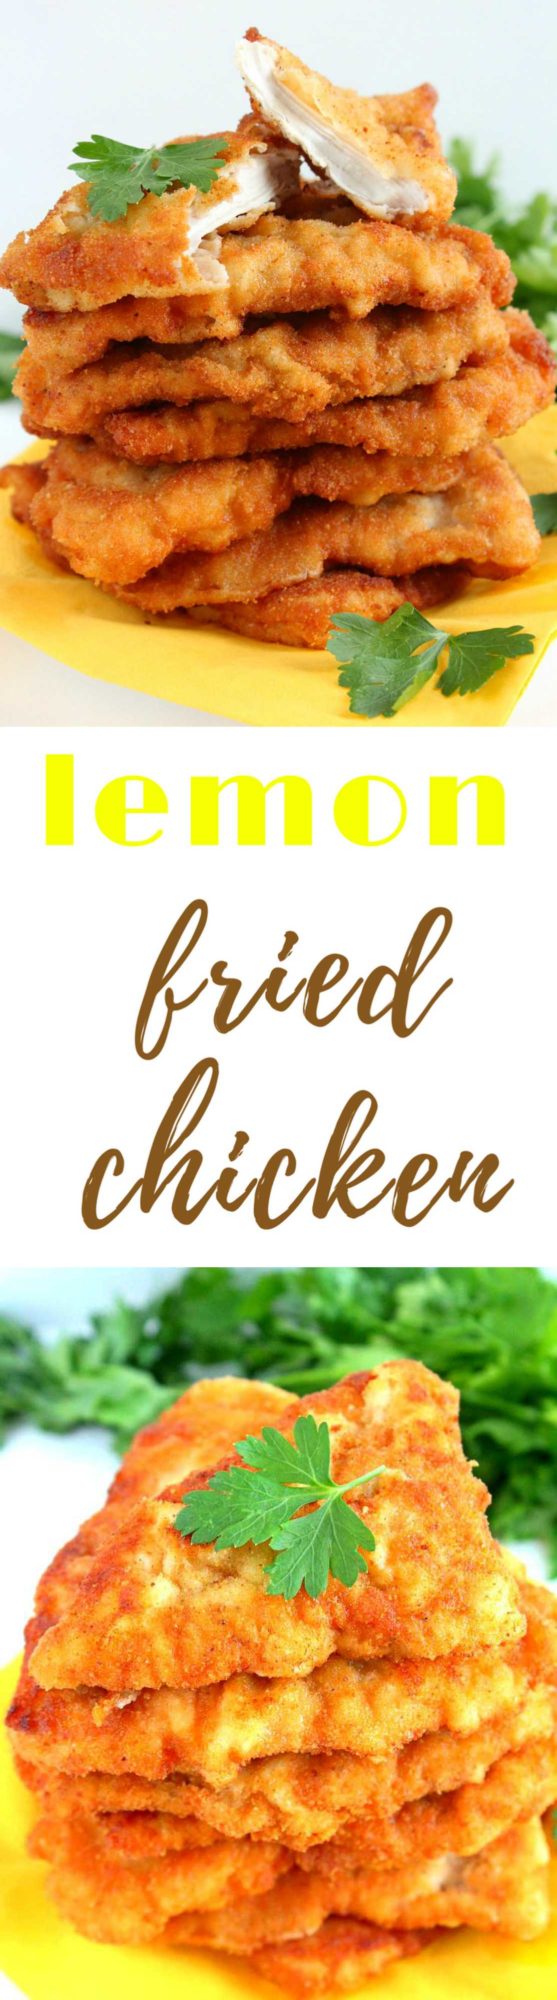 Lemon fried chicken